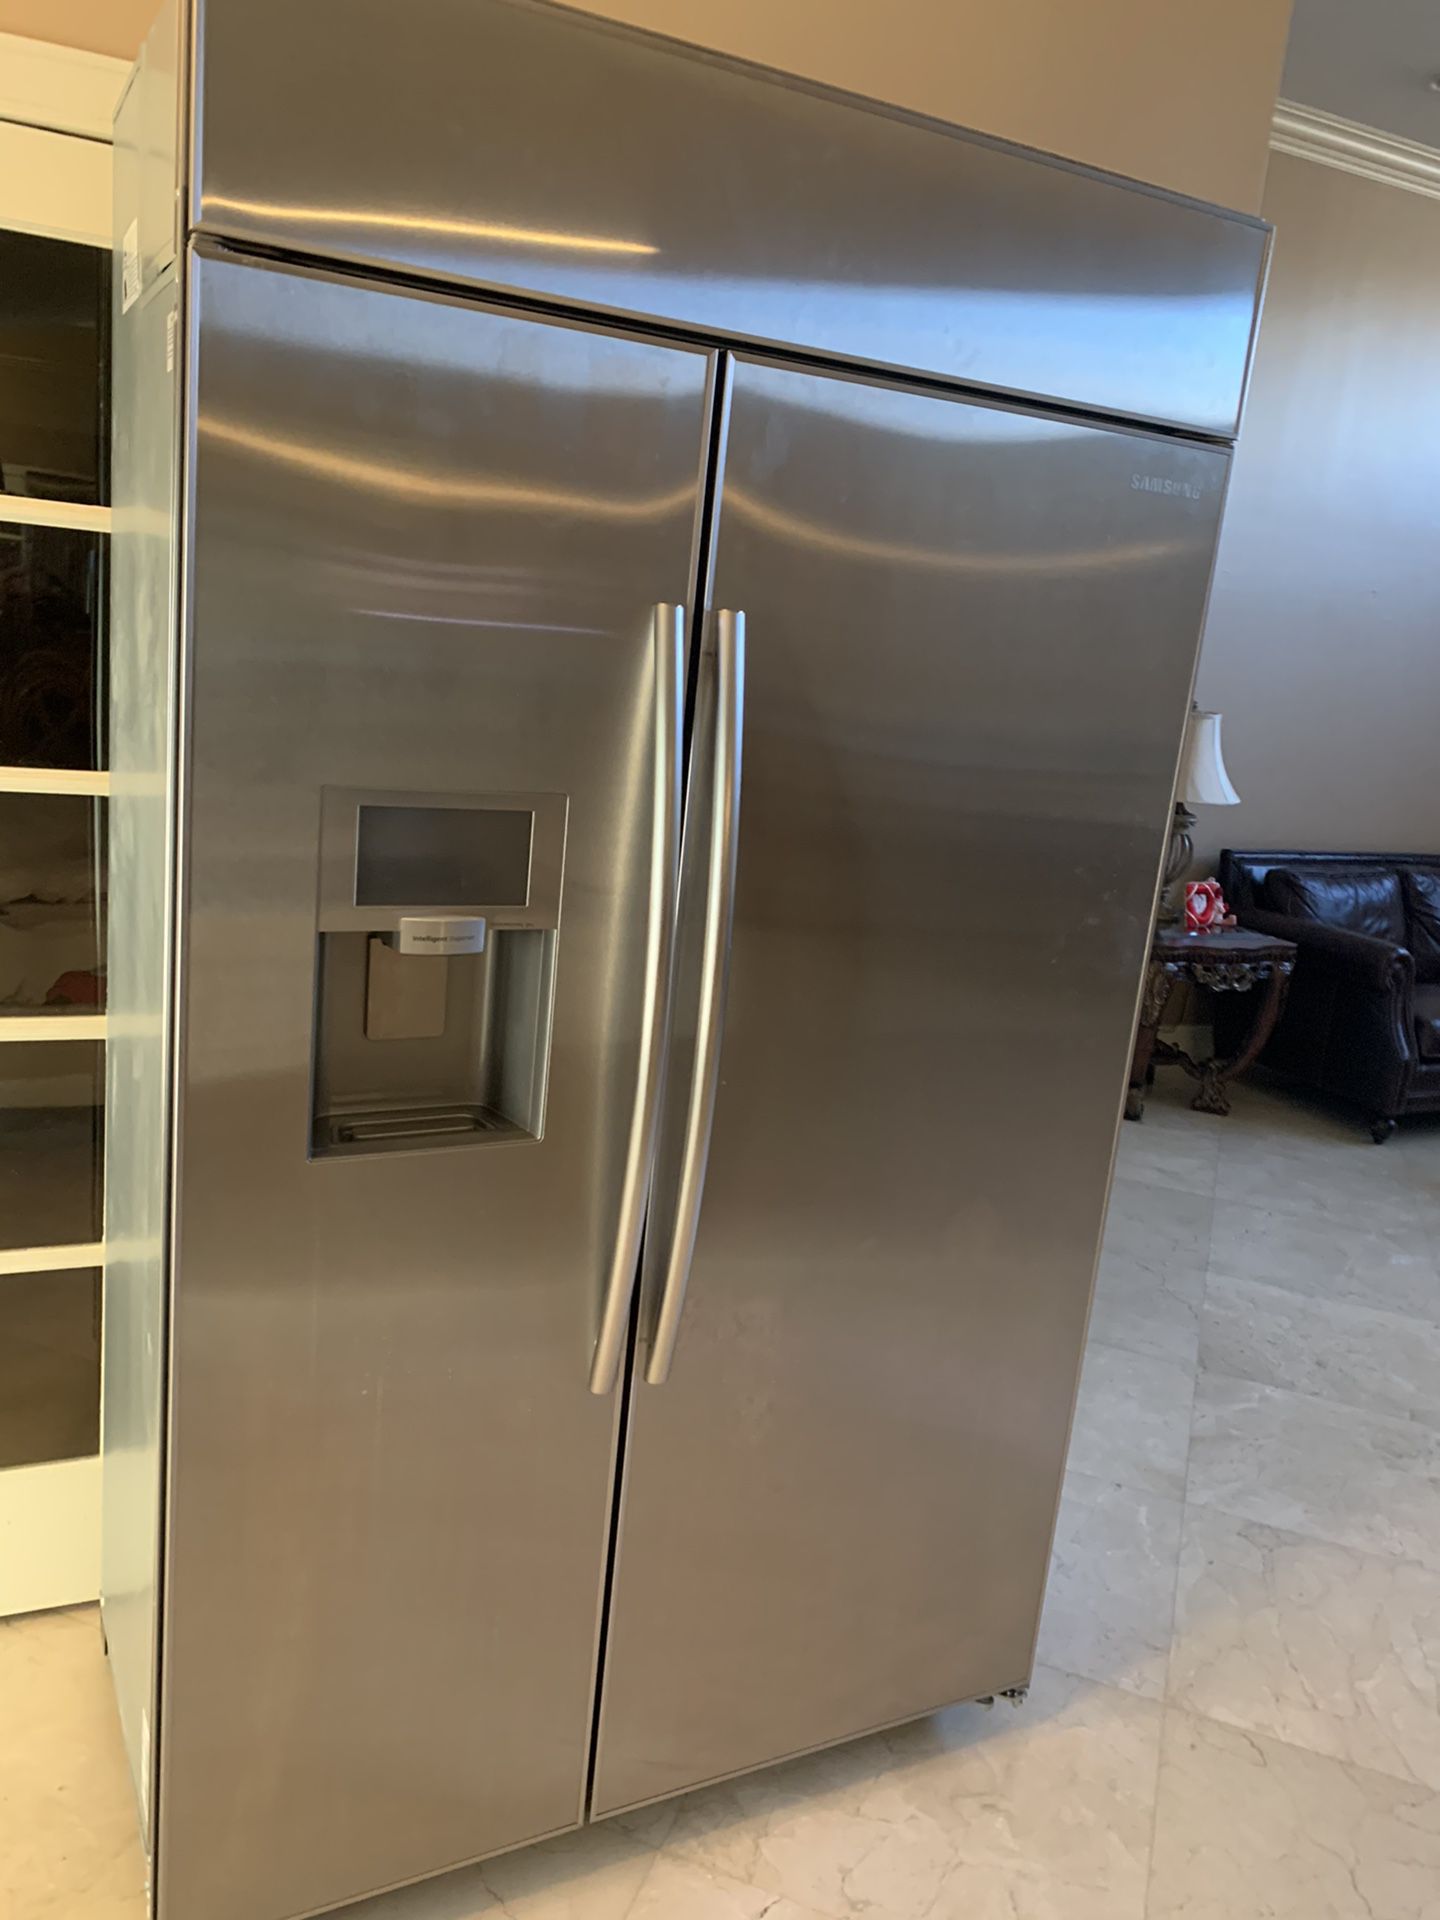 Samsung 48” refrigerator